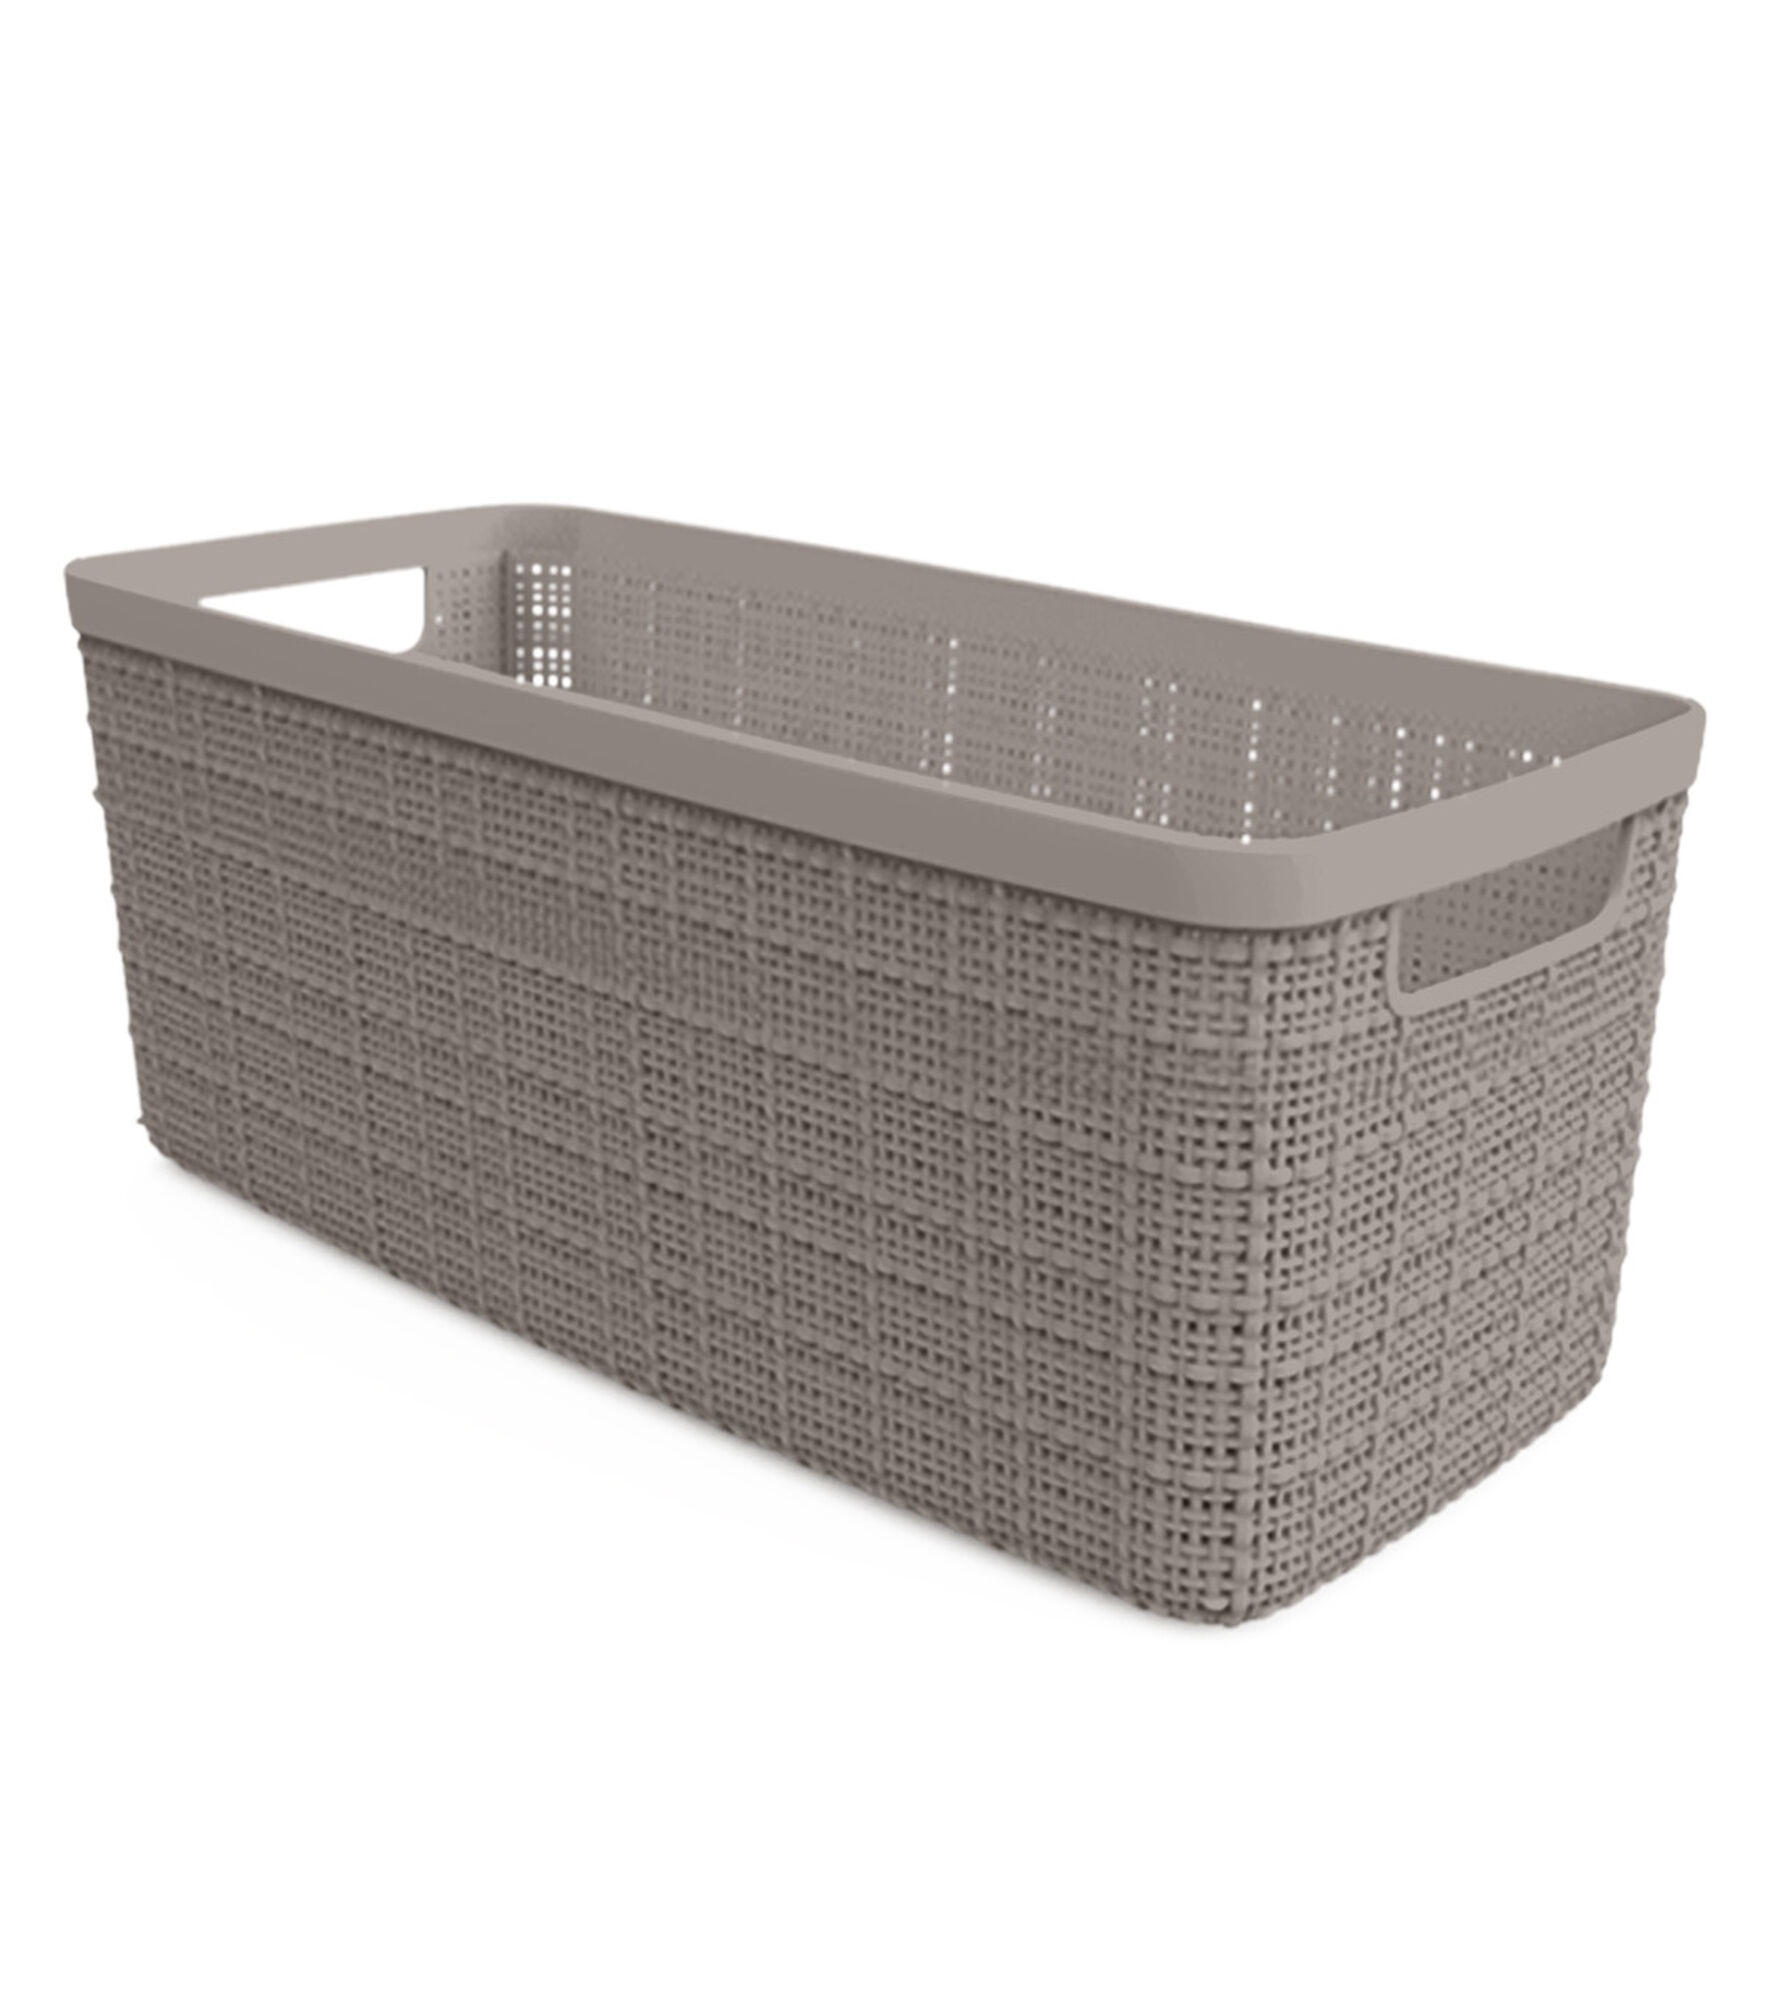 6.8 Liter Resin Basket With Cutout Handles, Cobblestone, hi-res